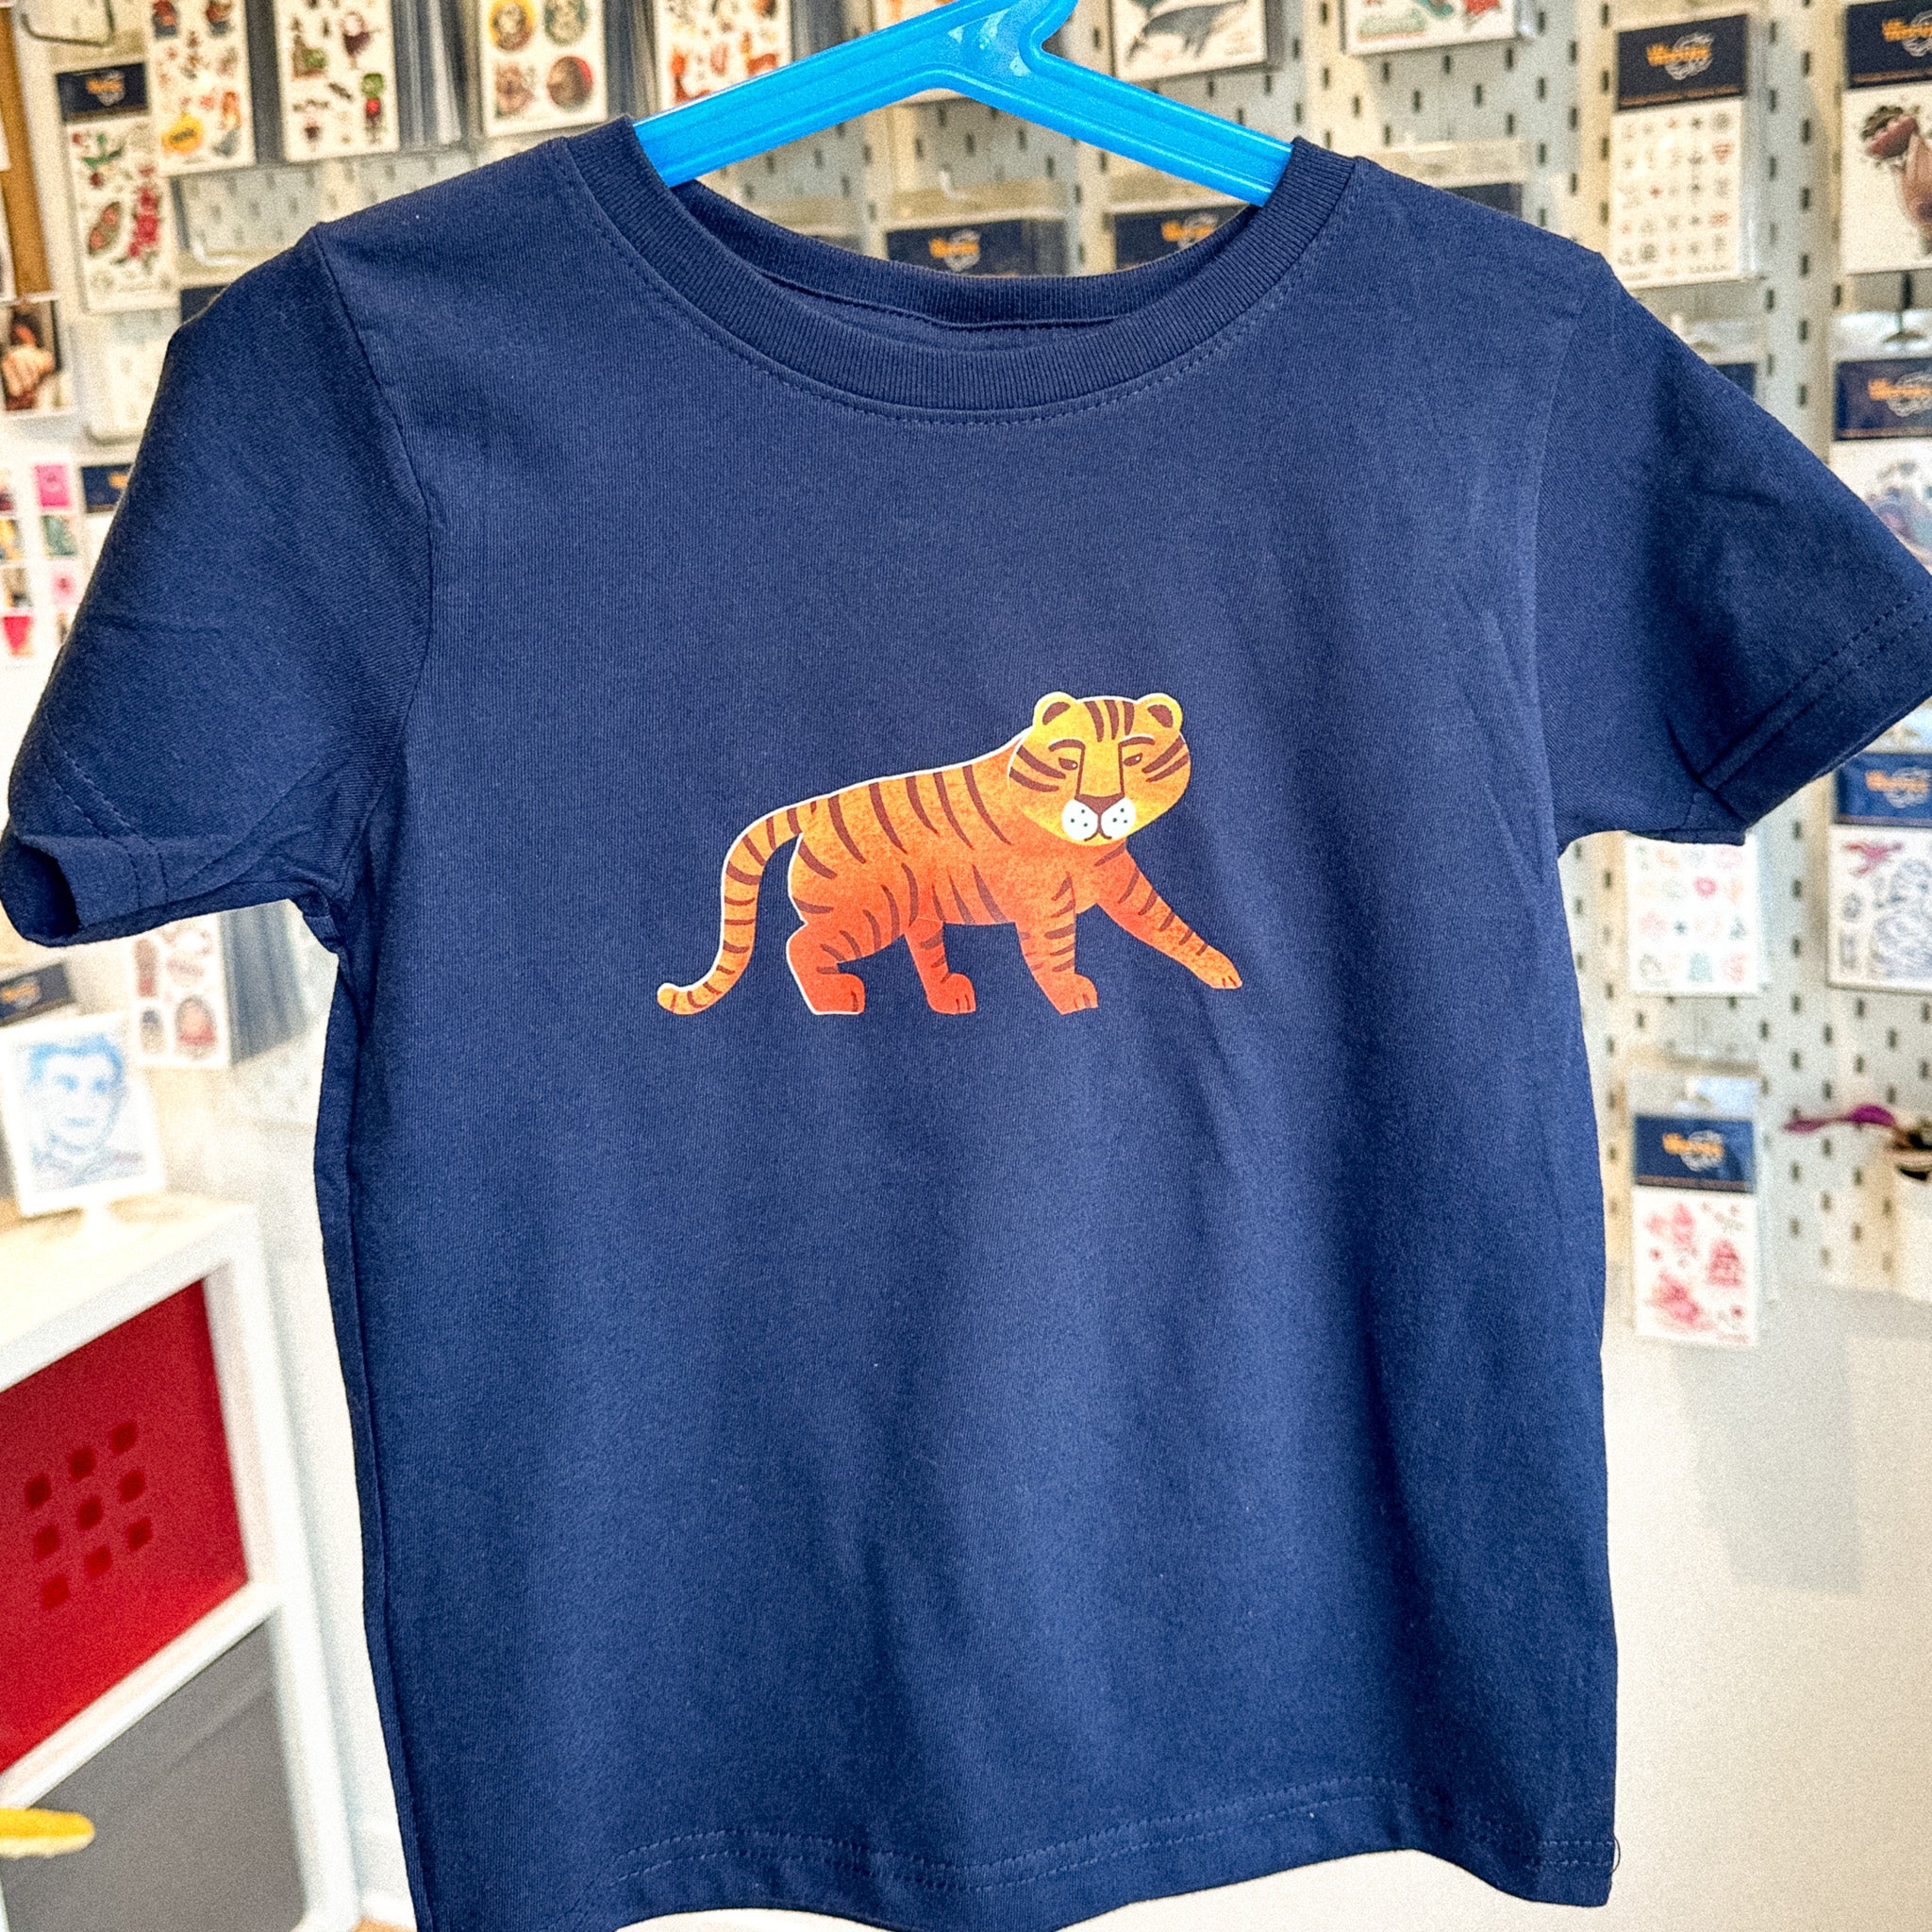 Children's t-shirt - The tiger